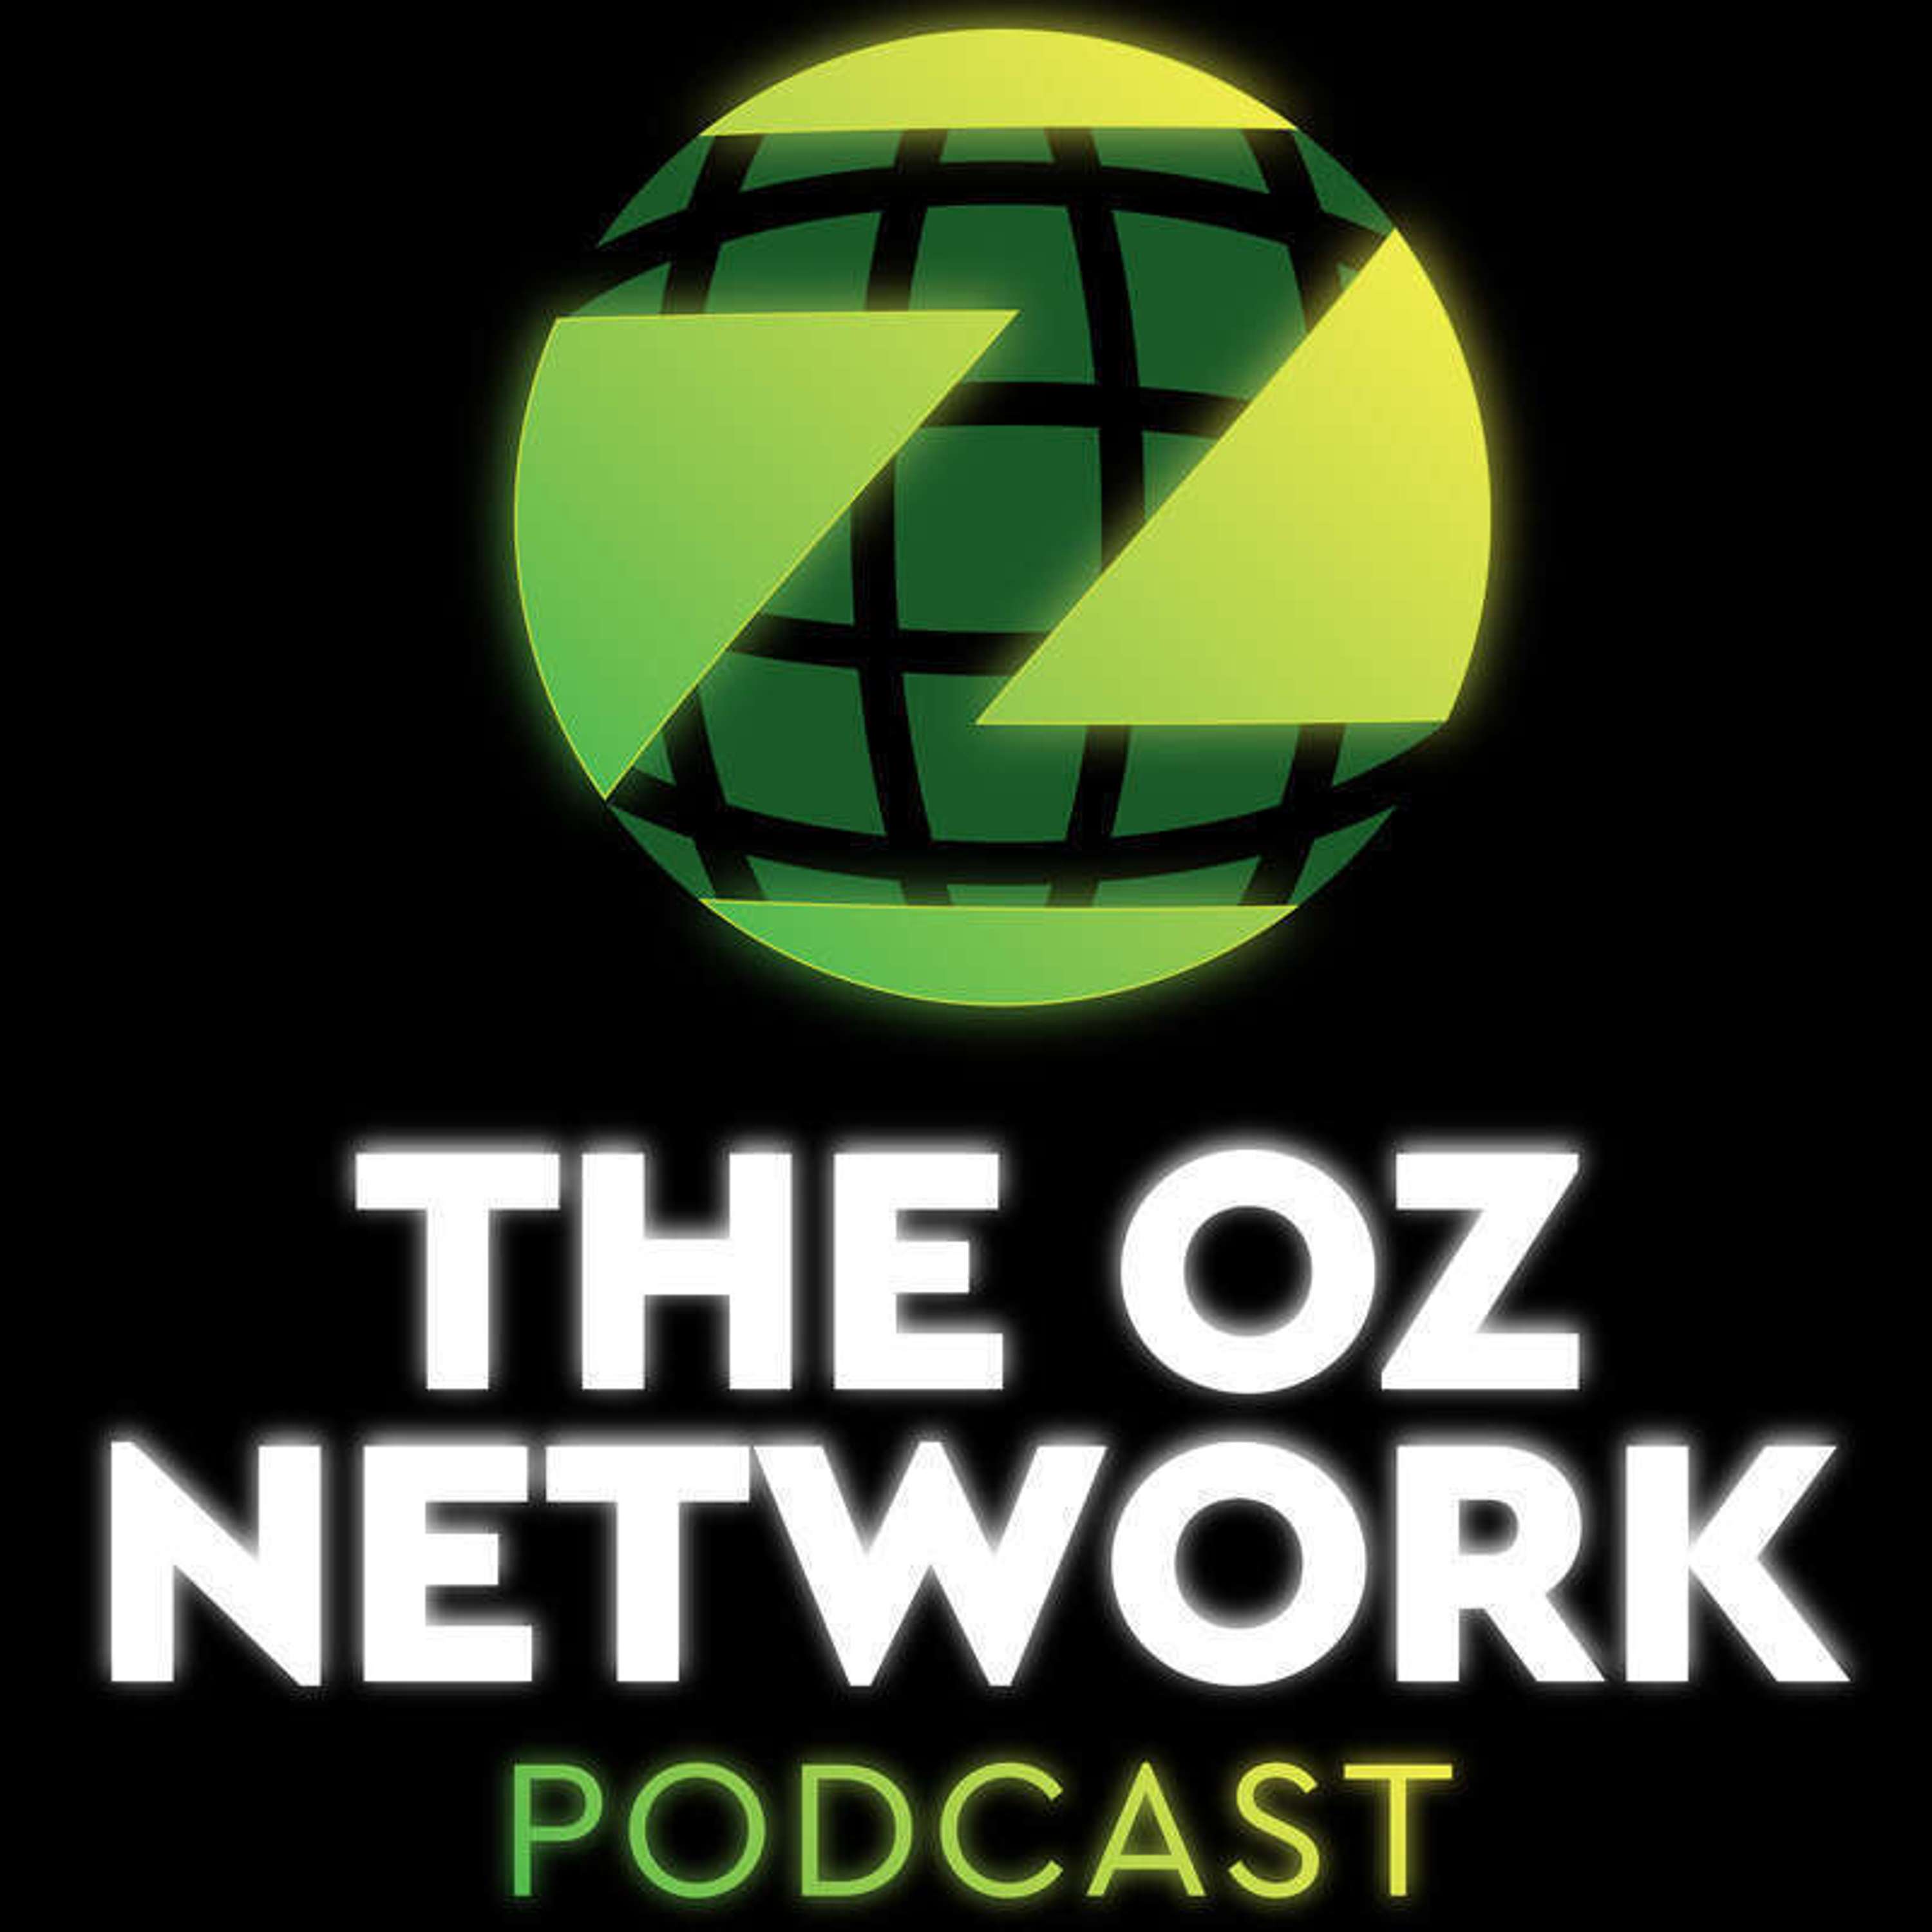 The Amazing Race Season 36, Episode 3 Recap - The Oz Network TV